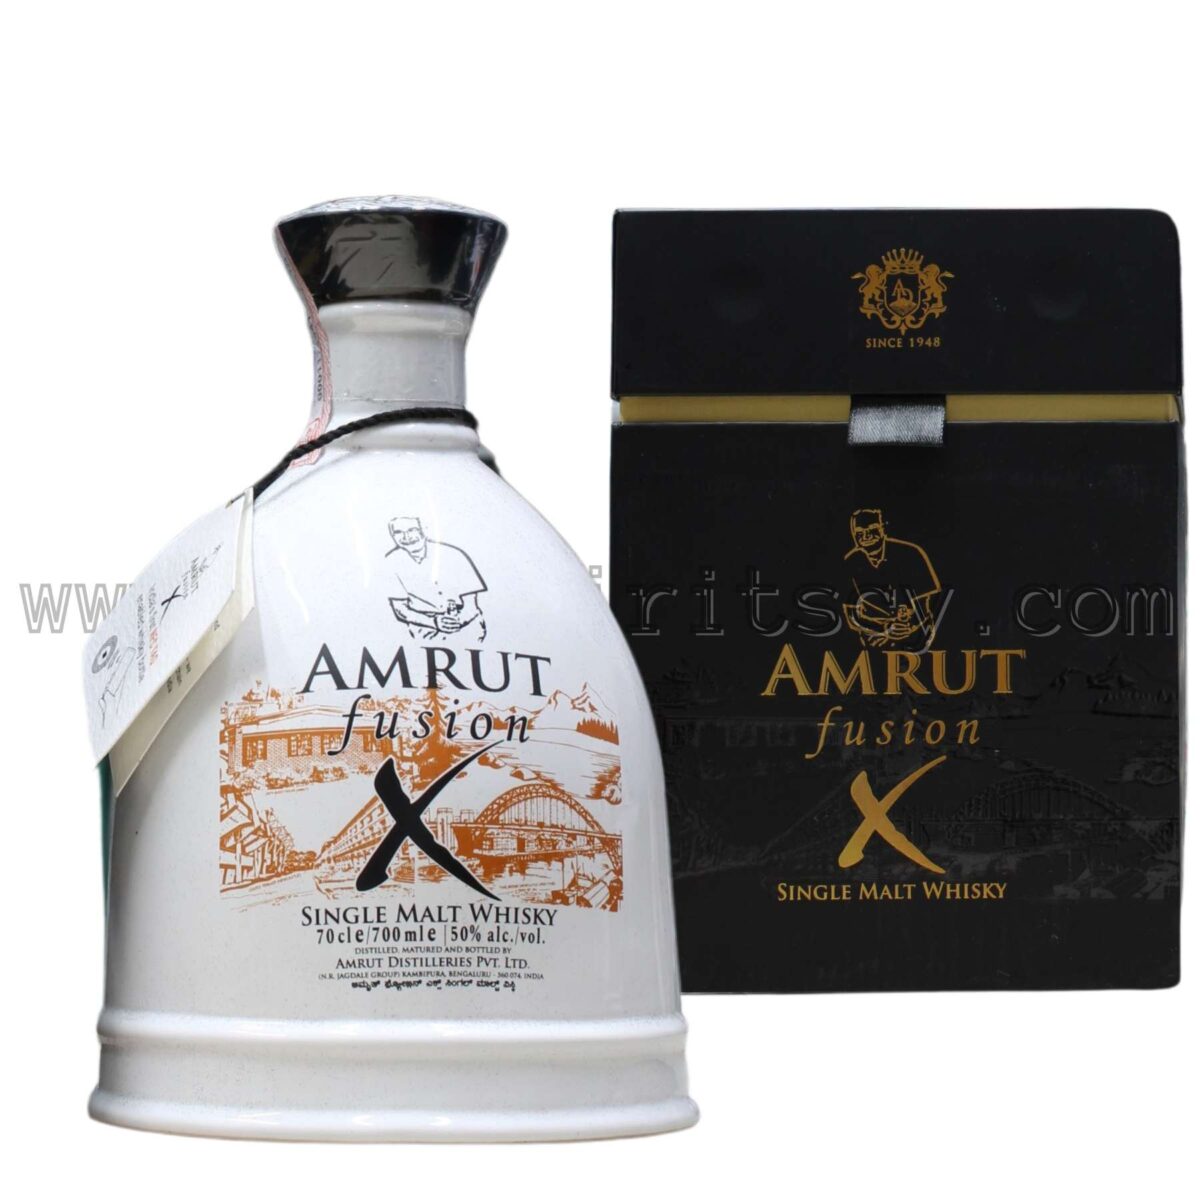 Amrut Fusion X FSCY Cyprus Single Malt Whisky Pedro Ximenez Price CY Order Online